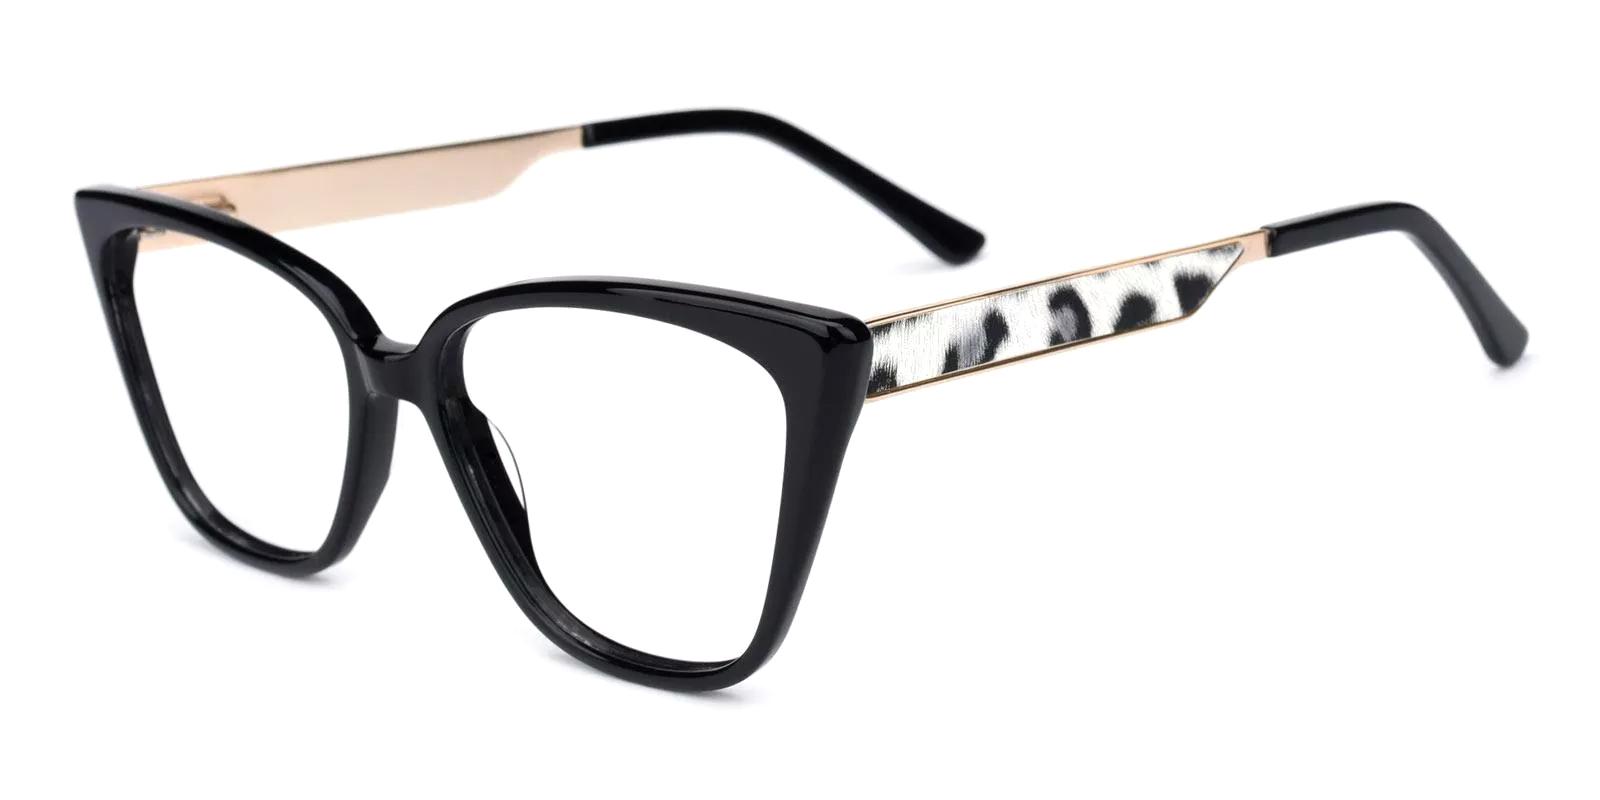 Fari Black Acetate Eyeglasses , UniversalBridgeFit Frames from ABBE Glasses